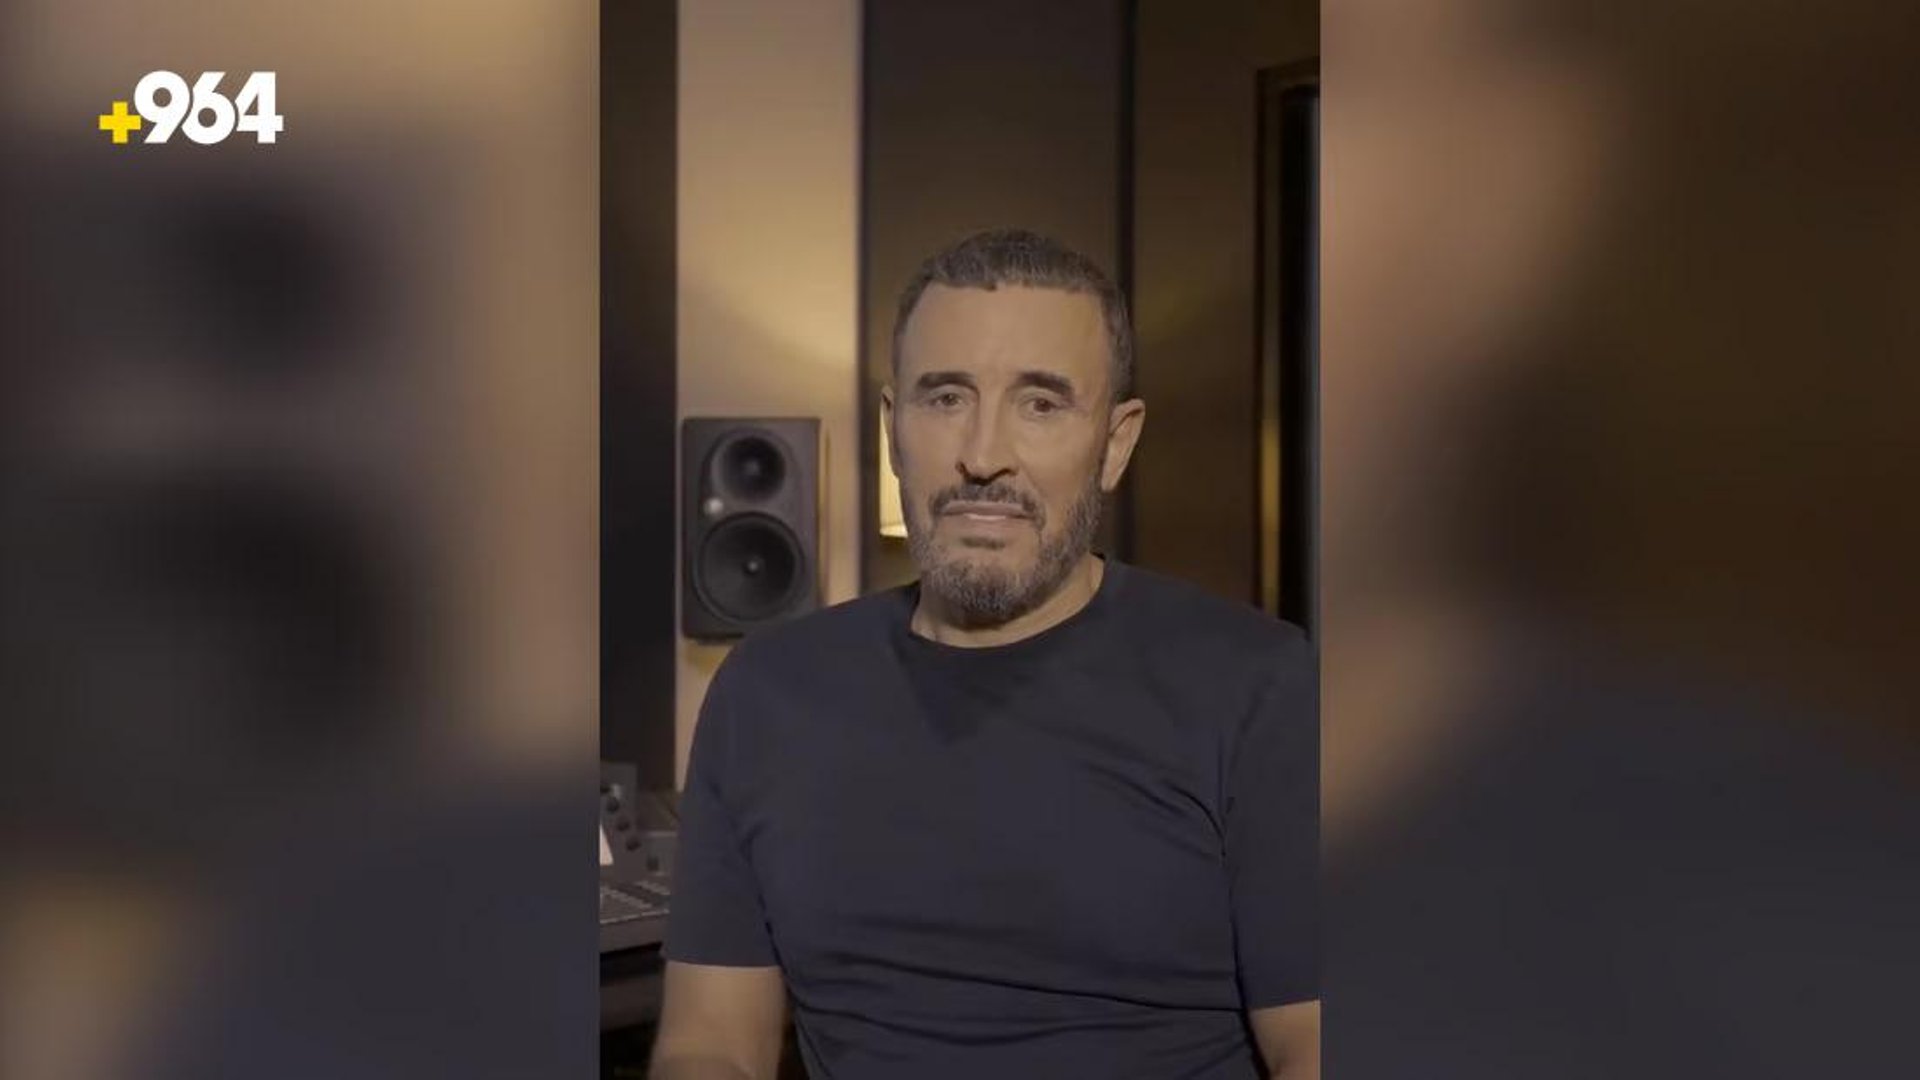 Singer Kadim AlSahir expresses sorrow for Gaza in video posted to social media